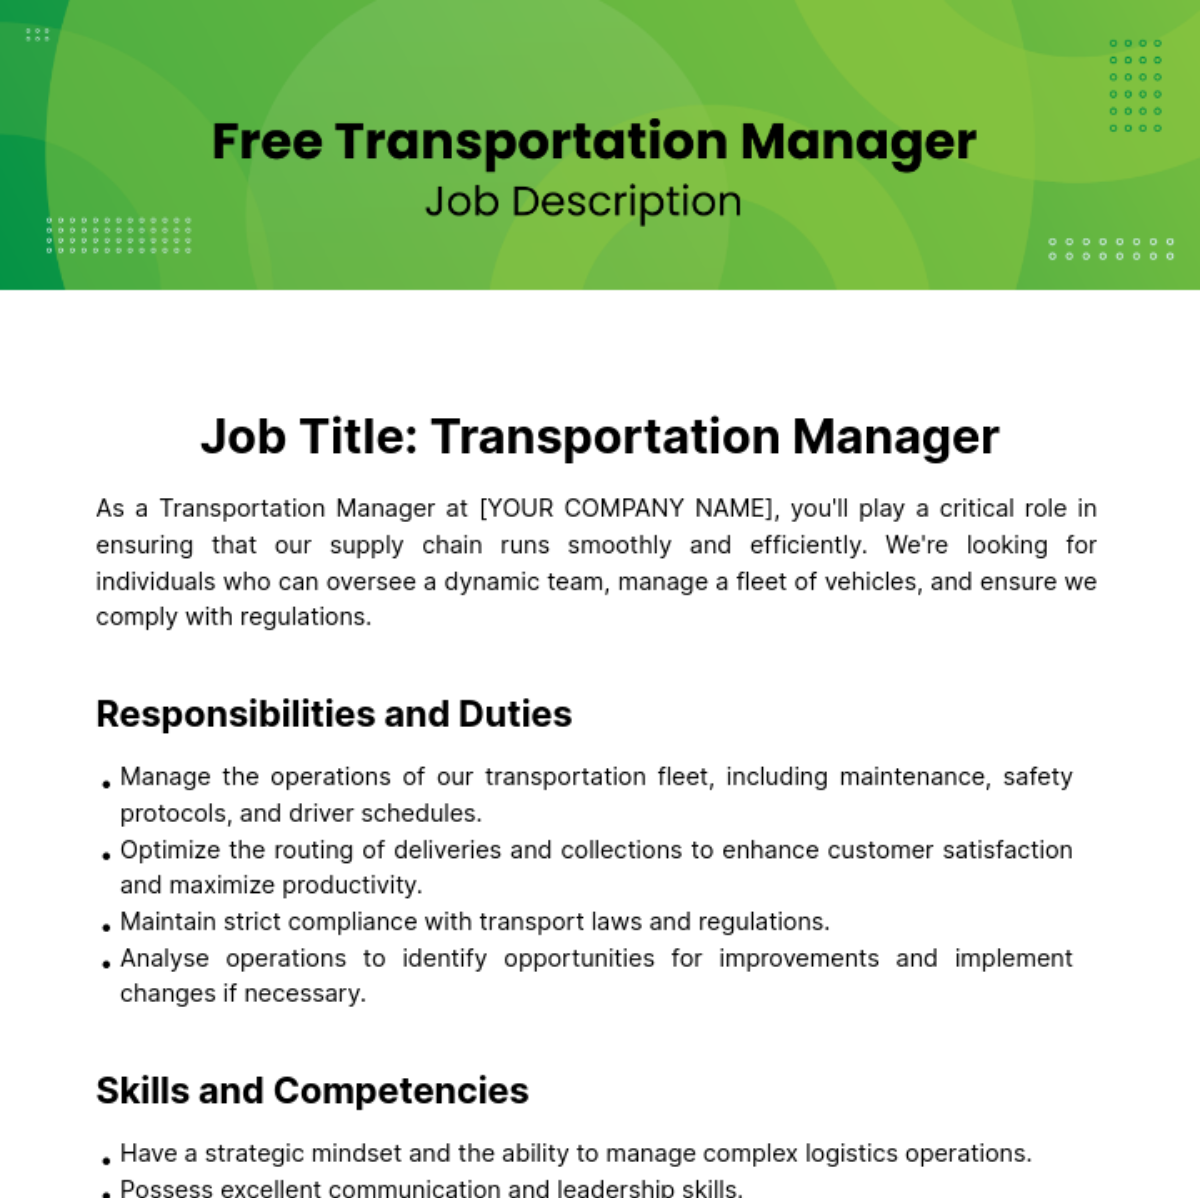 Free Transportation Manager Job Description Template